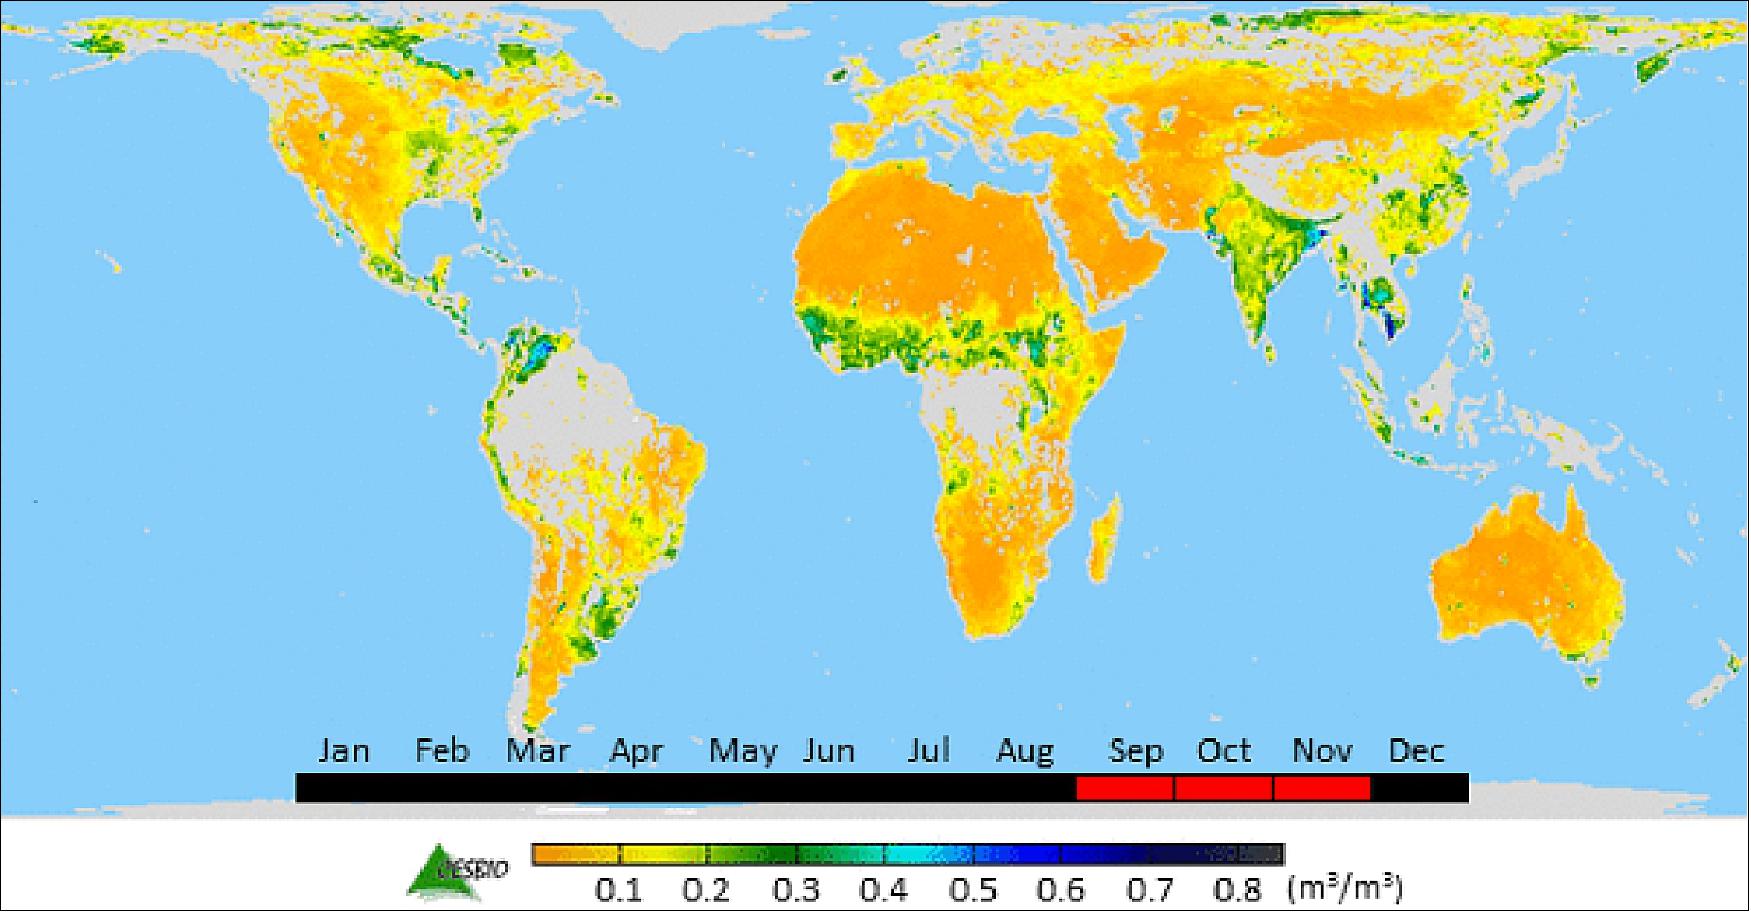 Figure 60: Seasonal soil moisture from SMOS (image credit: CESBIO) 68)